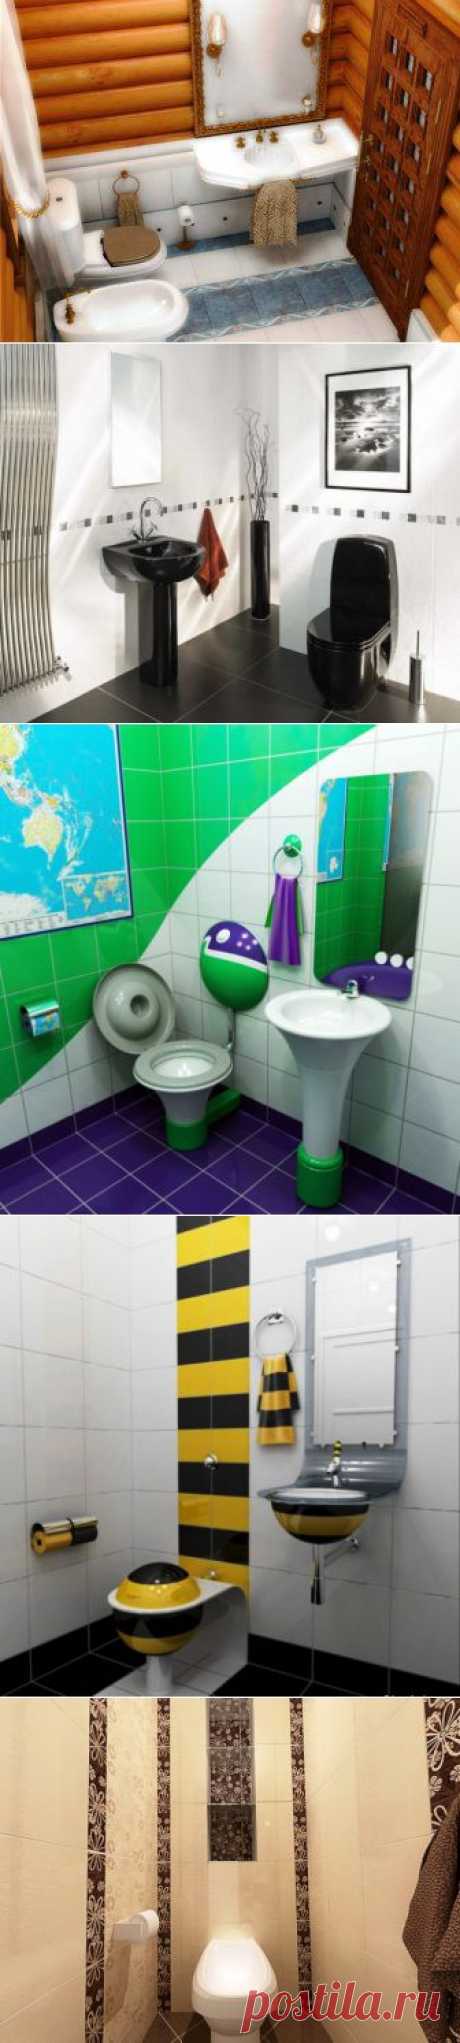 Дизайн туалета различной площади и конфигурации | Школа Ремонта